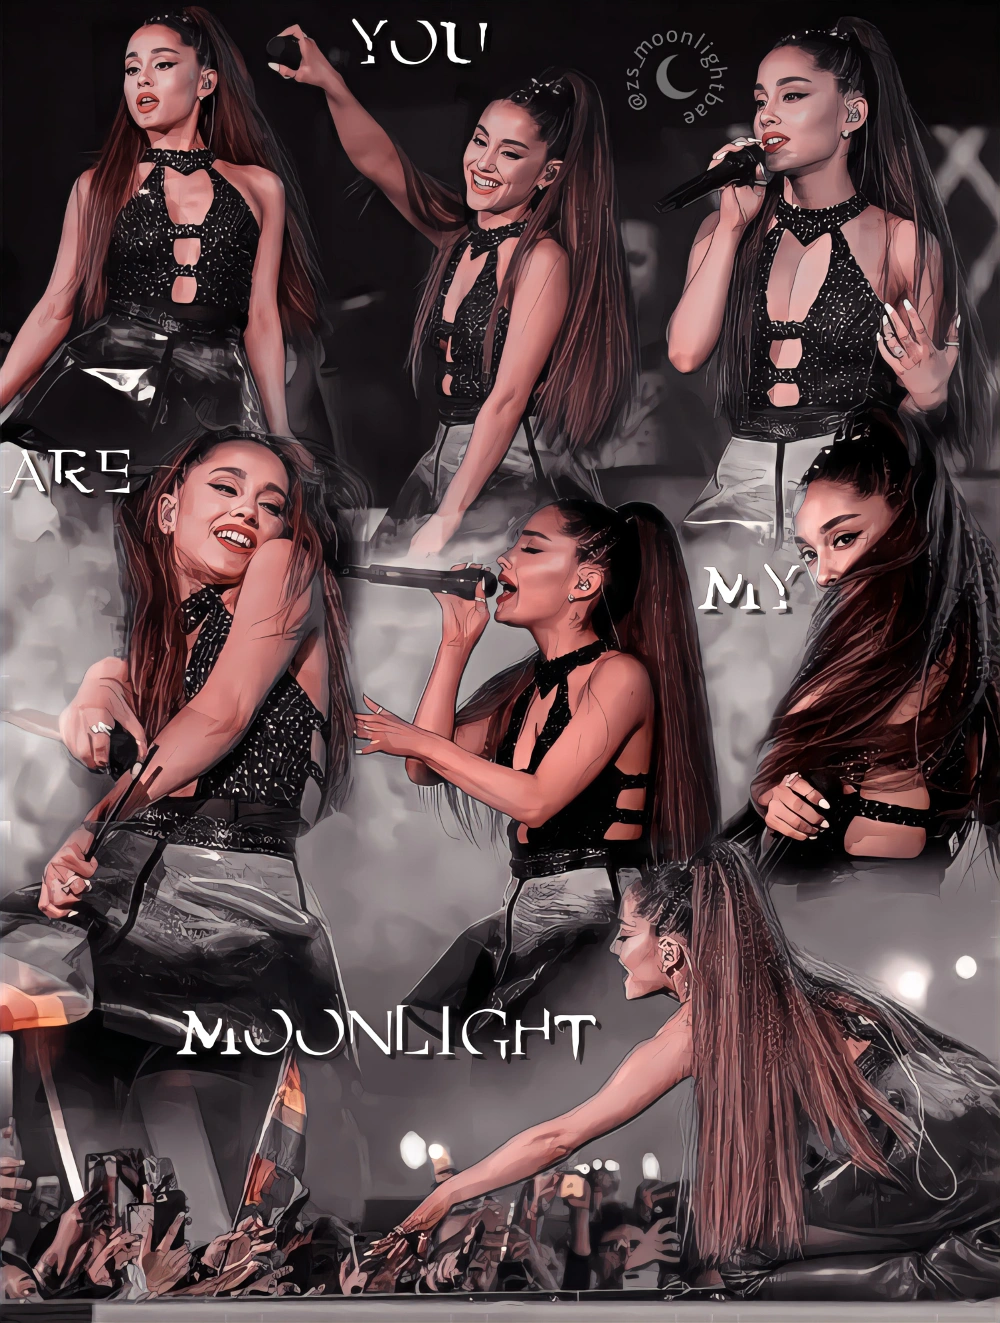 She is my moonlight